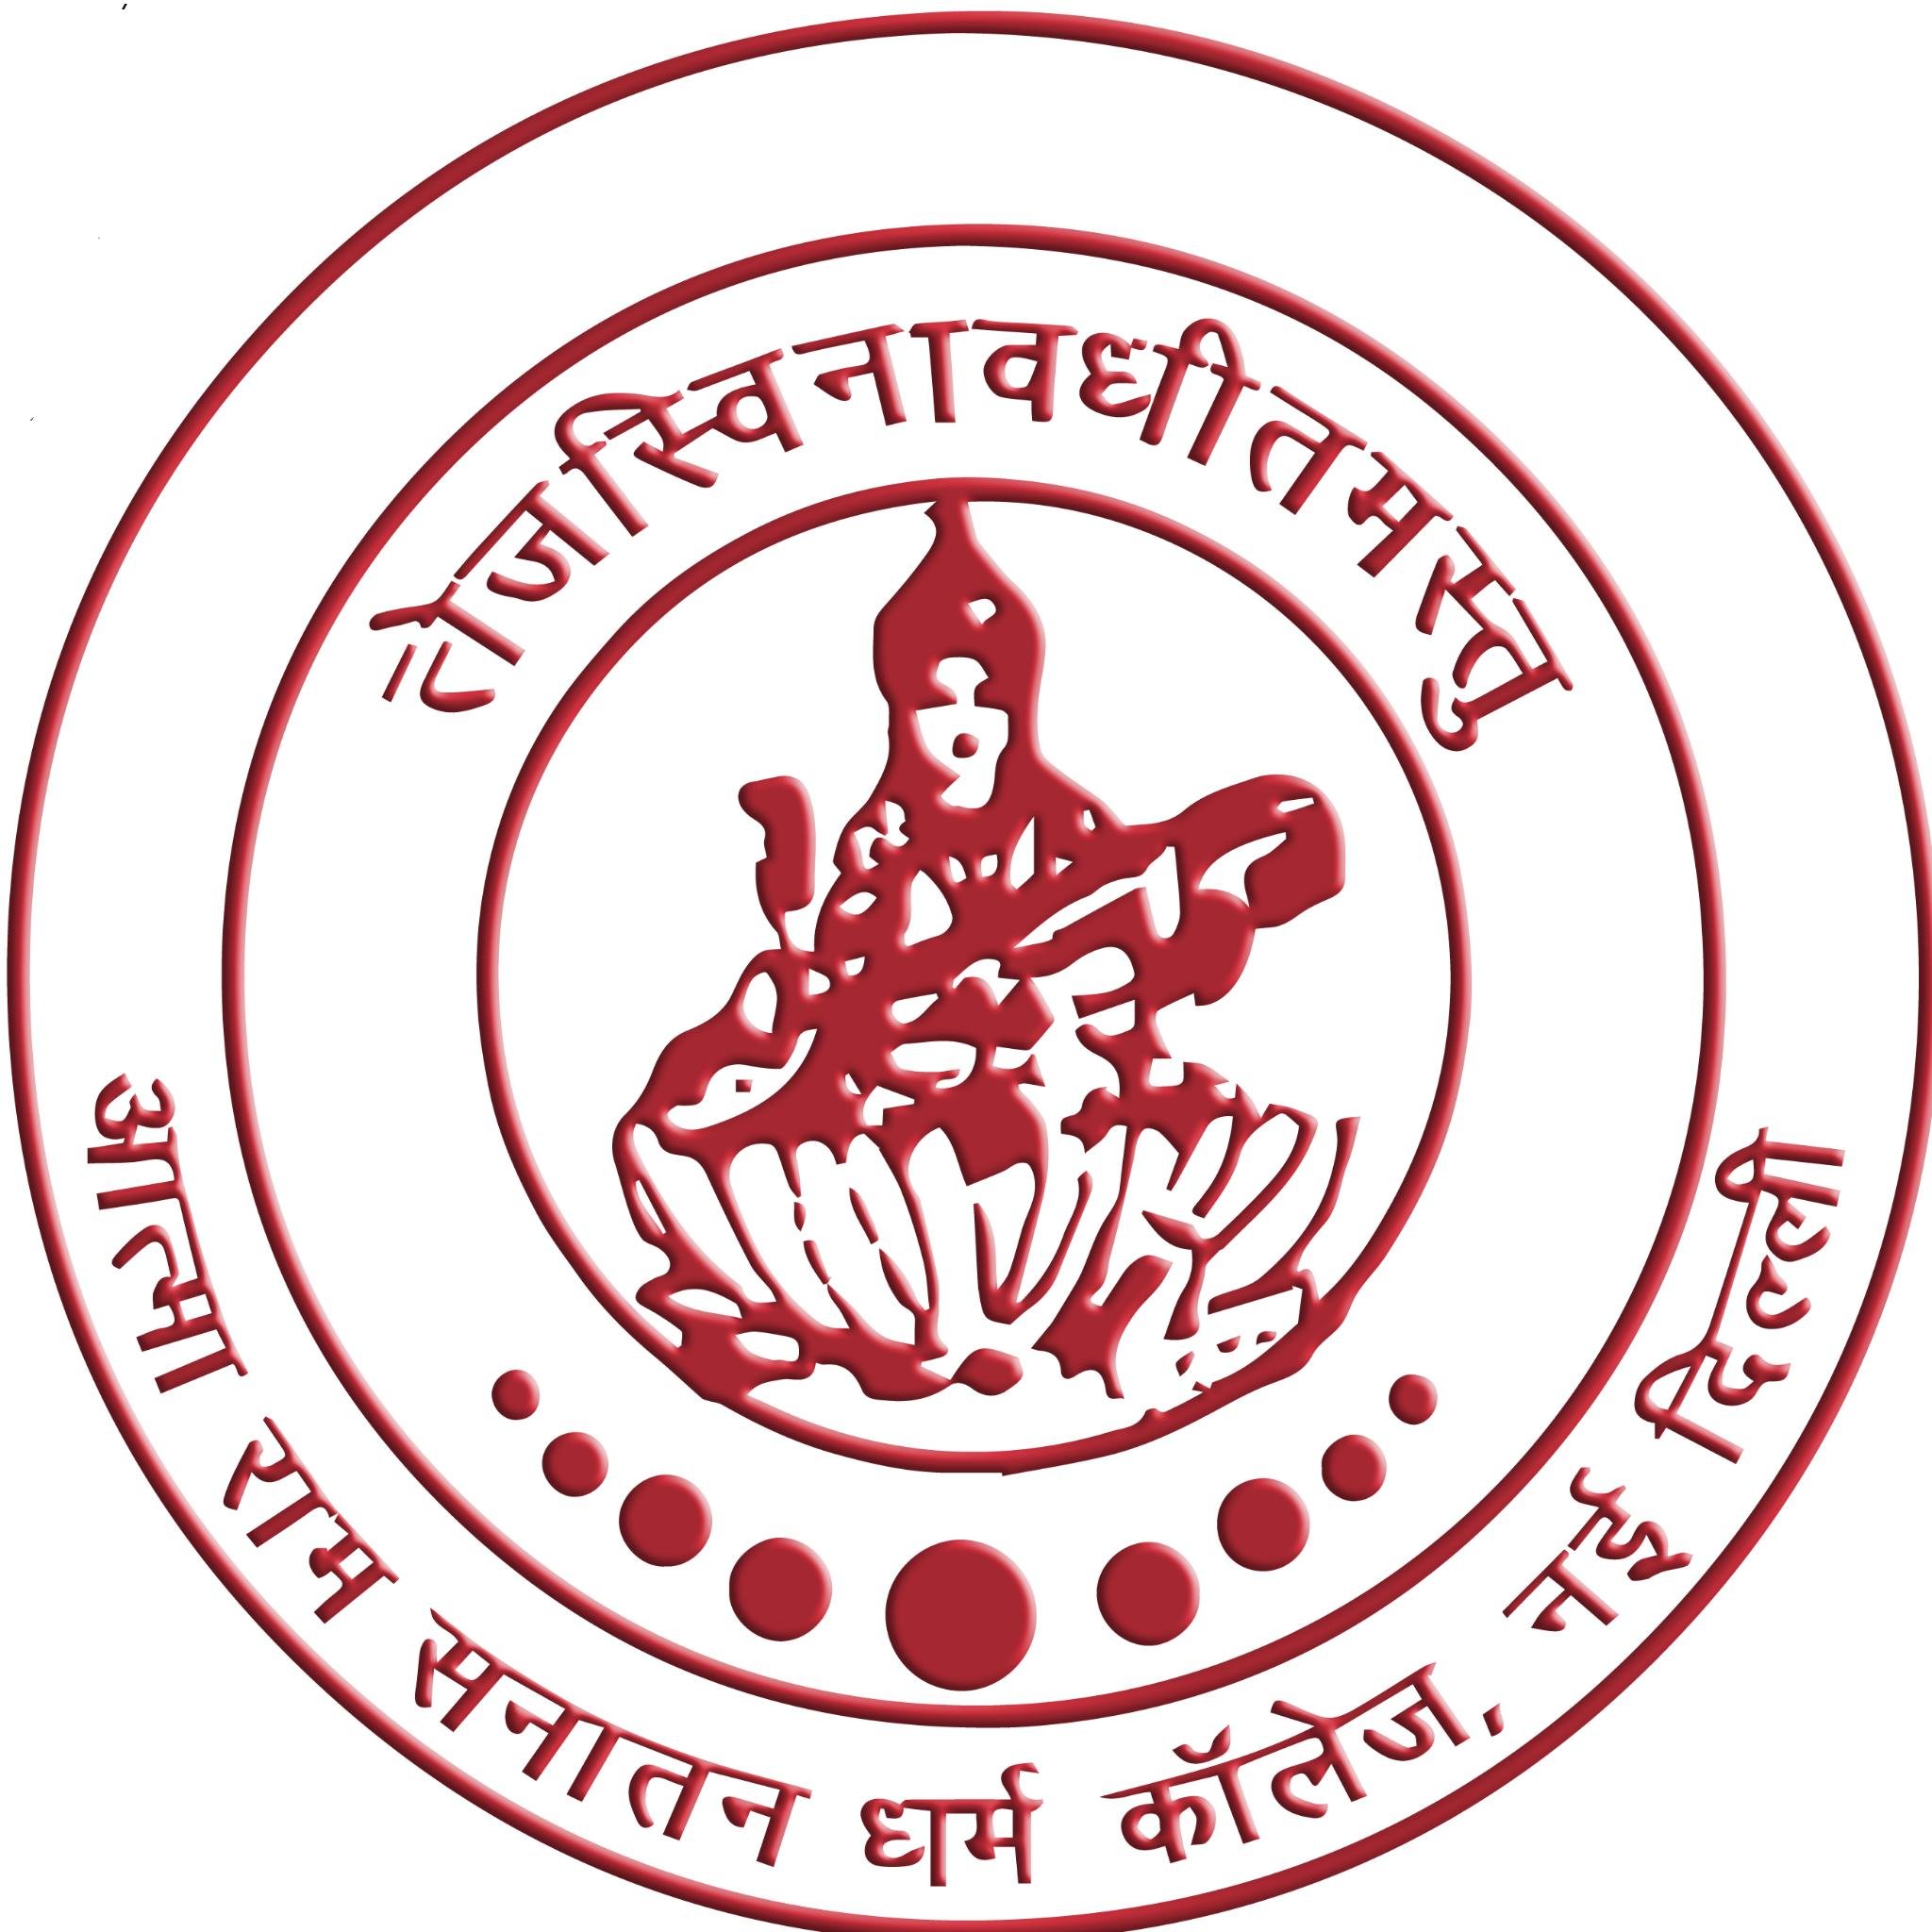 Official twitter handle of Atma Ram Sanatan Dharma College (University of Delhi)